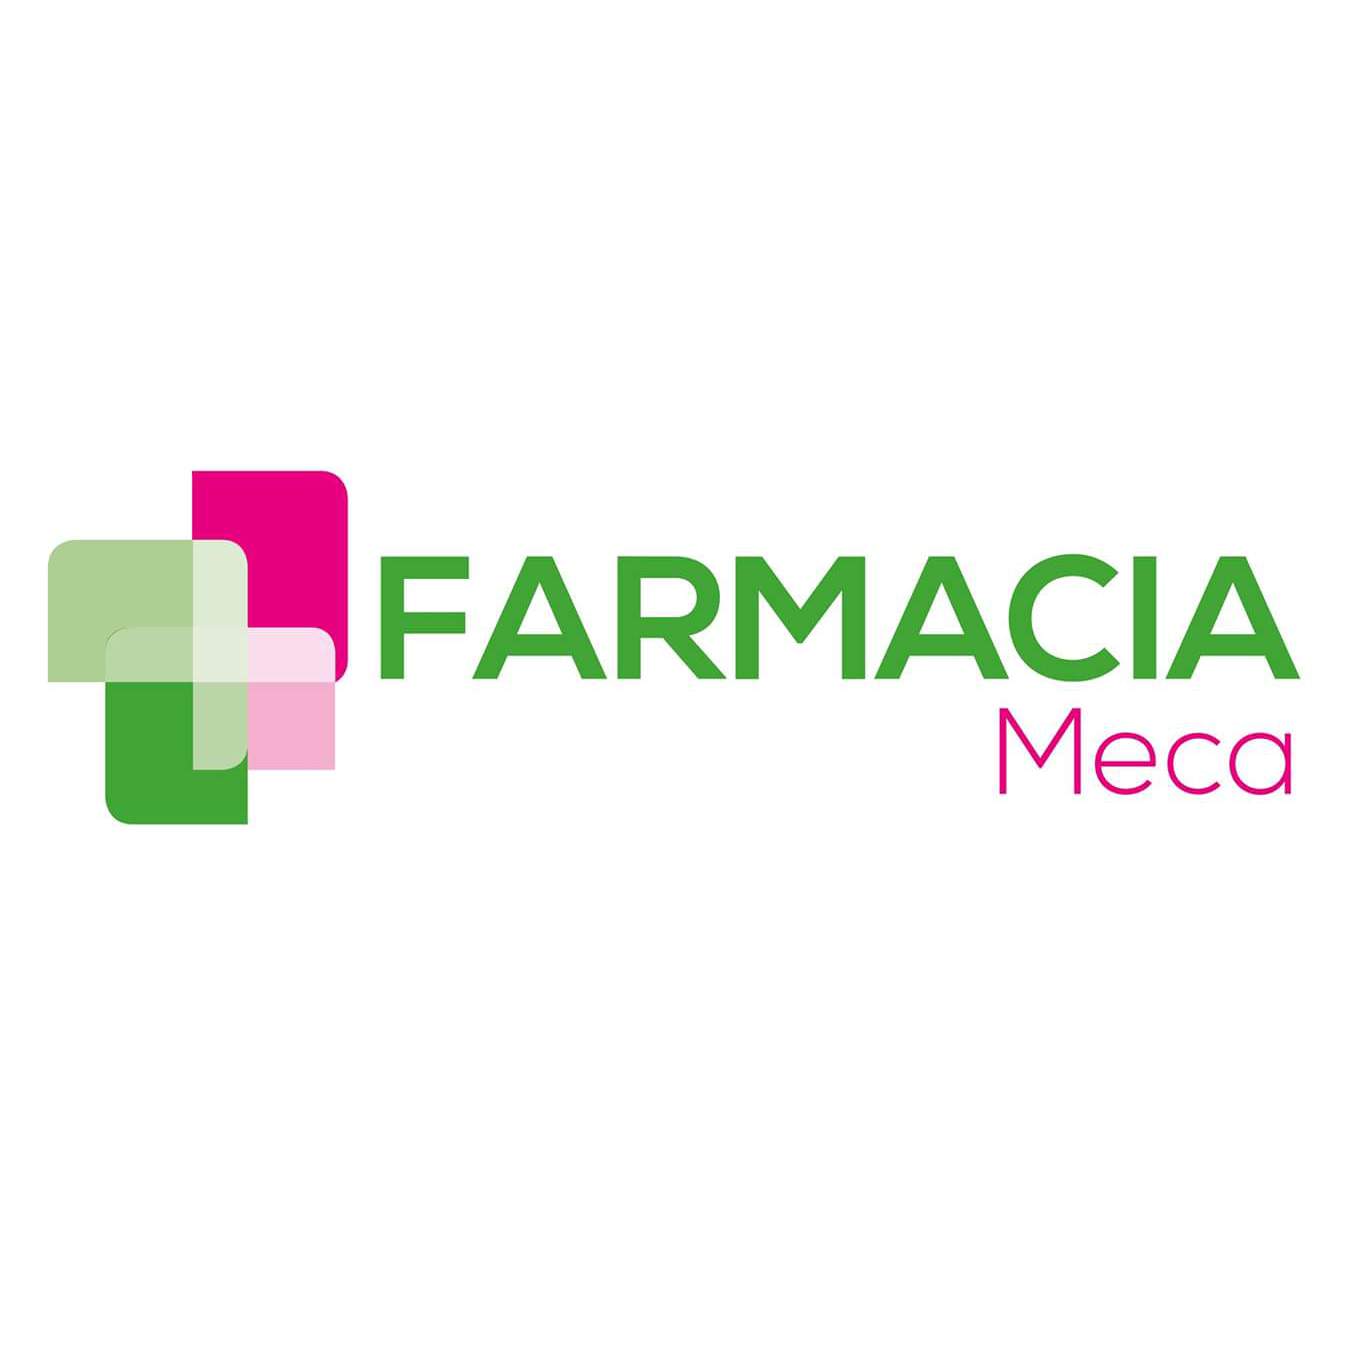 FARMACIA MECA Lda.Rocio Bergillos Huércal-Overa